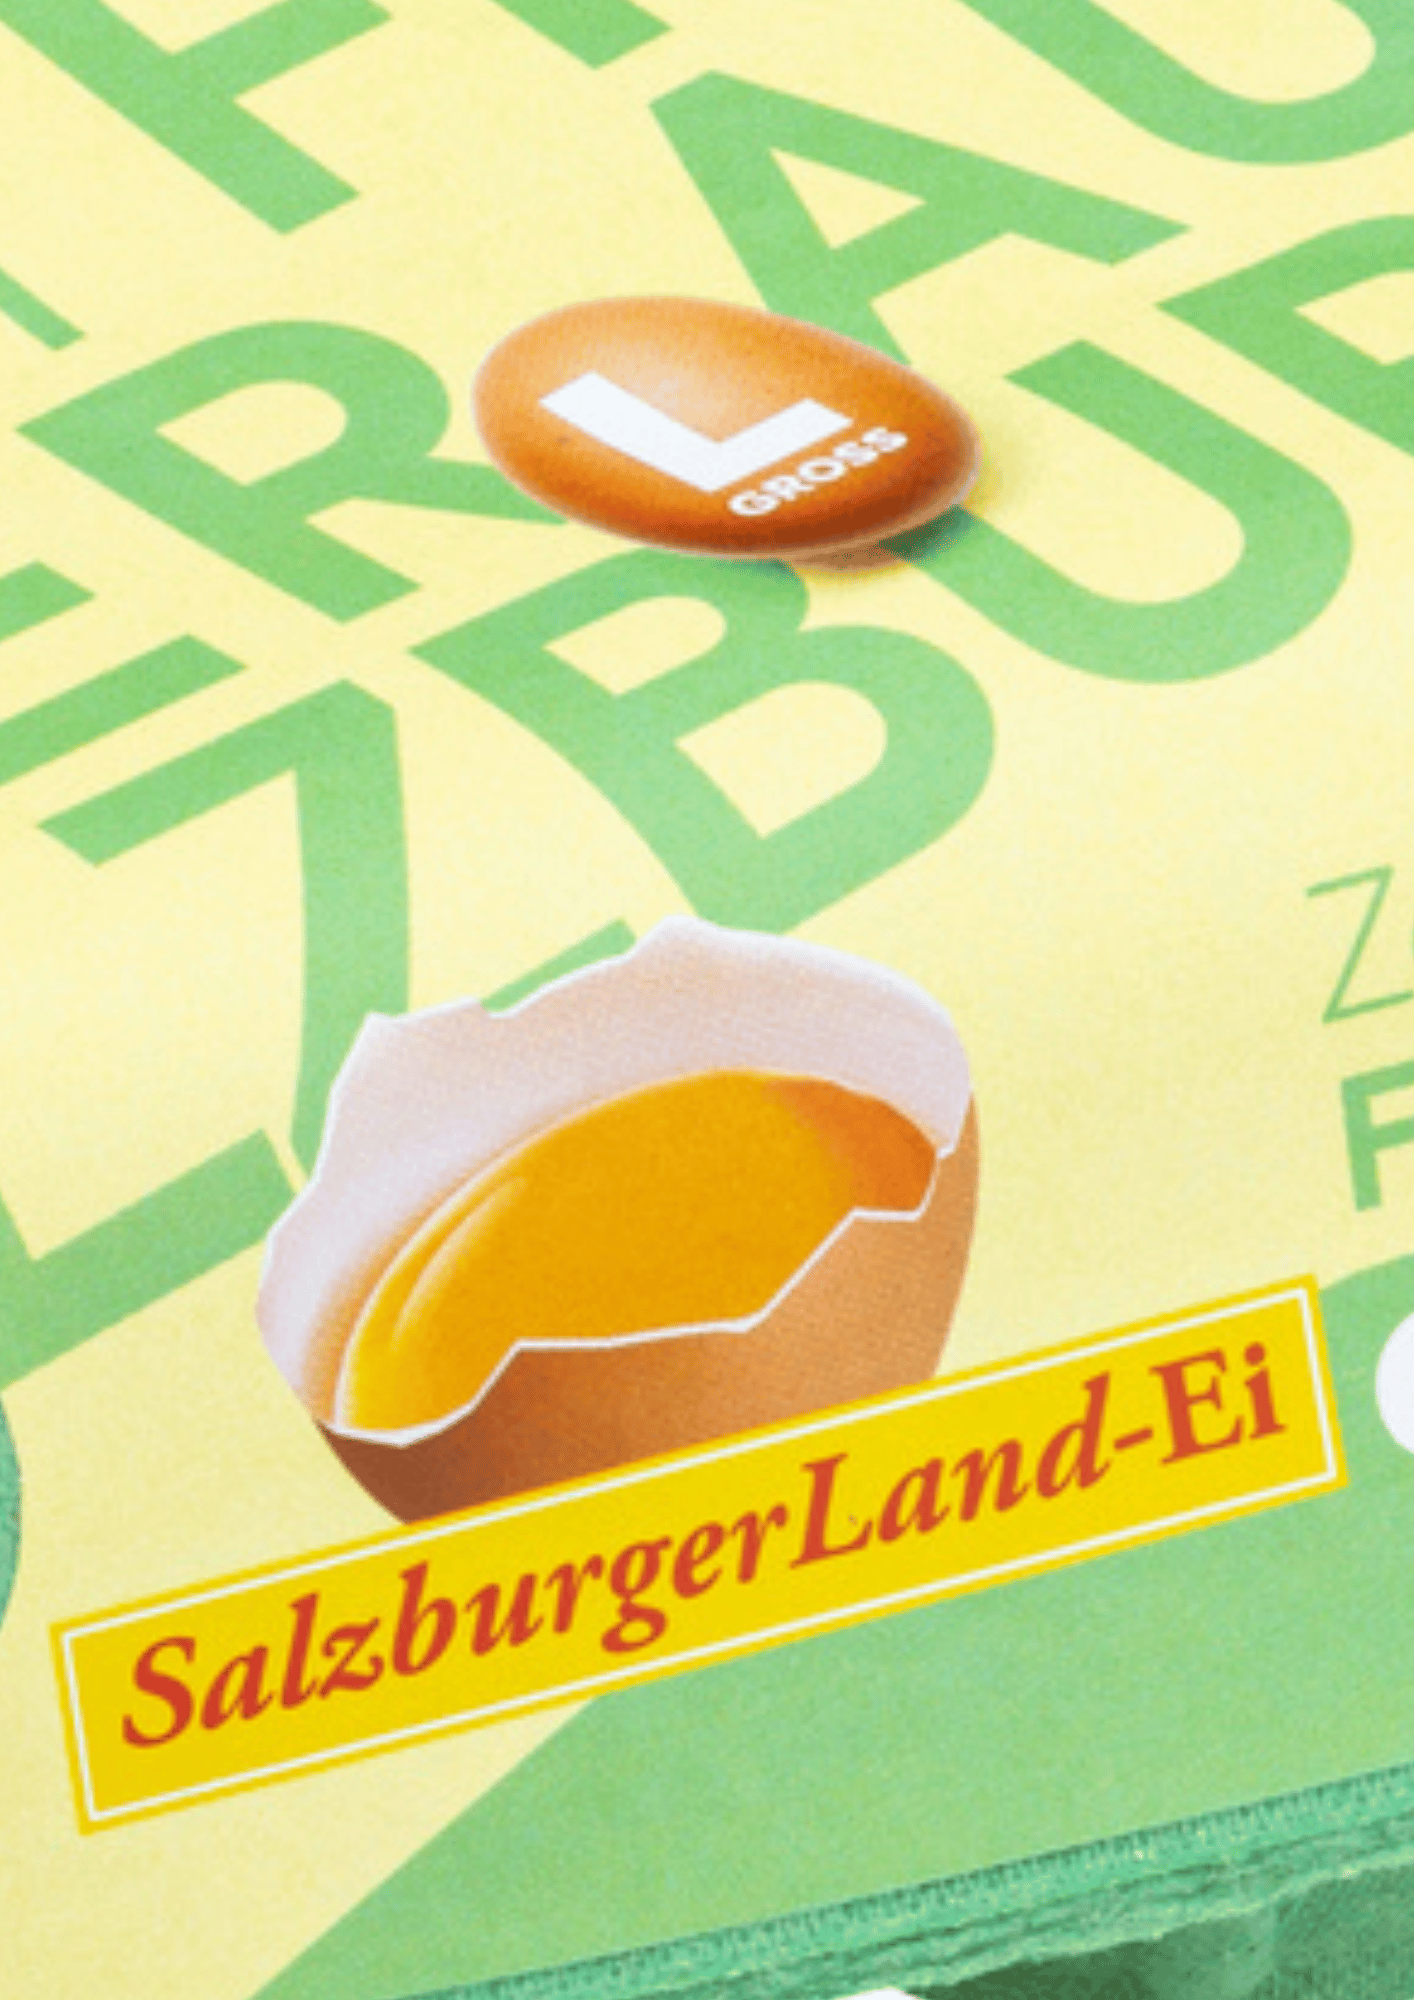 Oberhofbauer - SalzburgerLand Ei bei Salzburg schmeckt